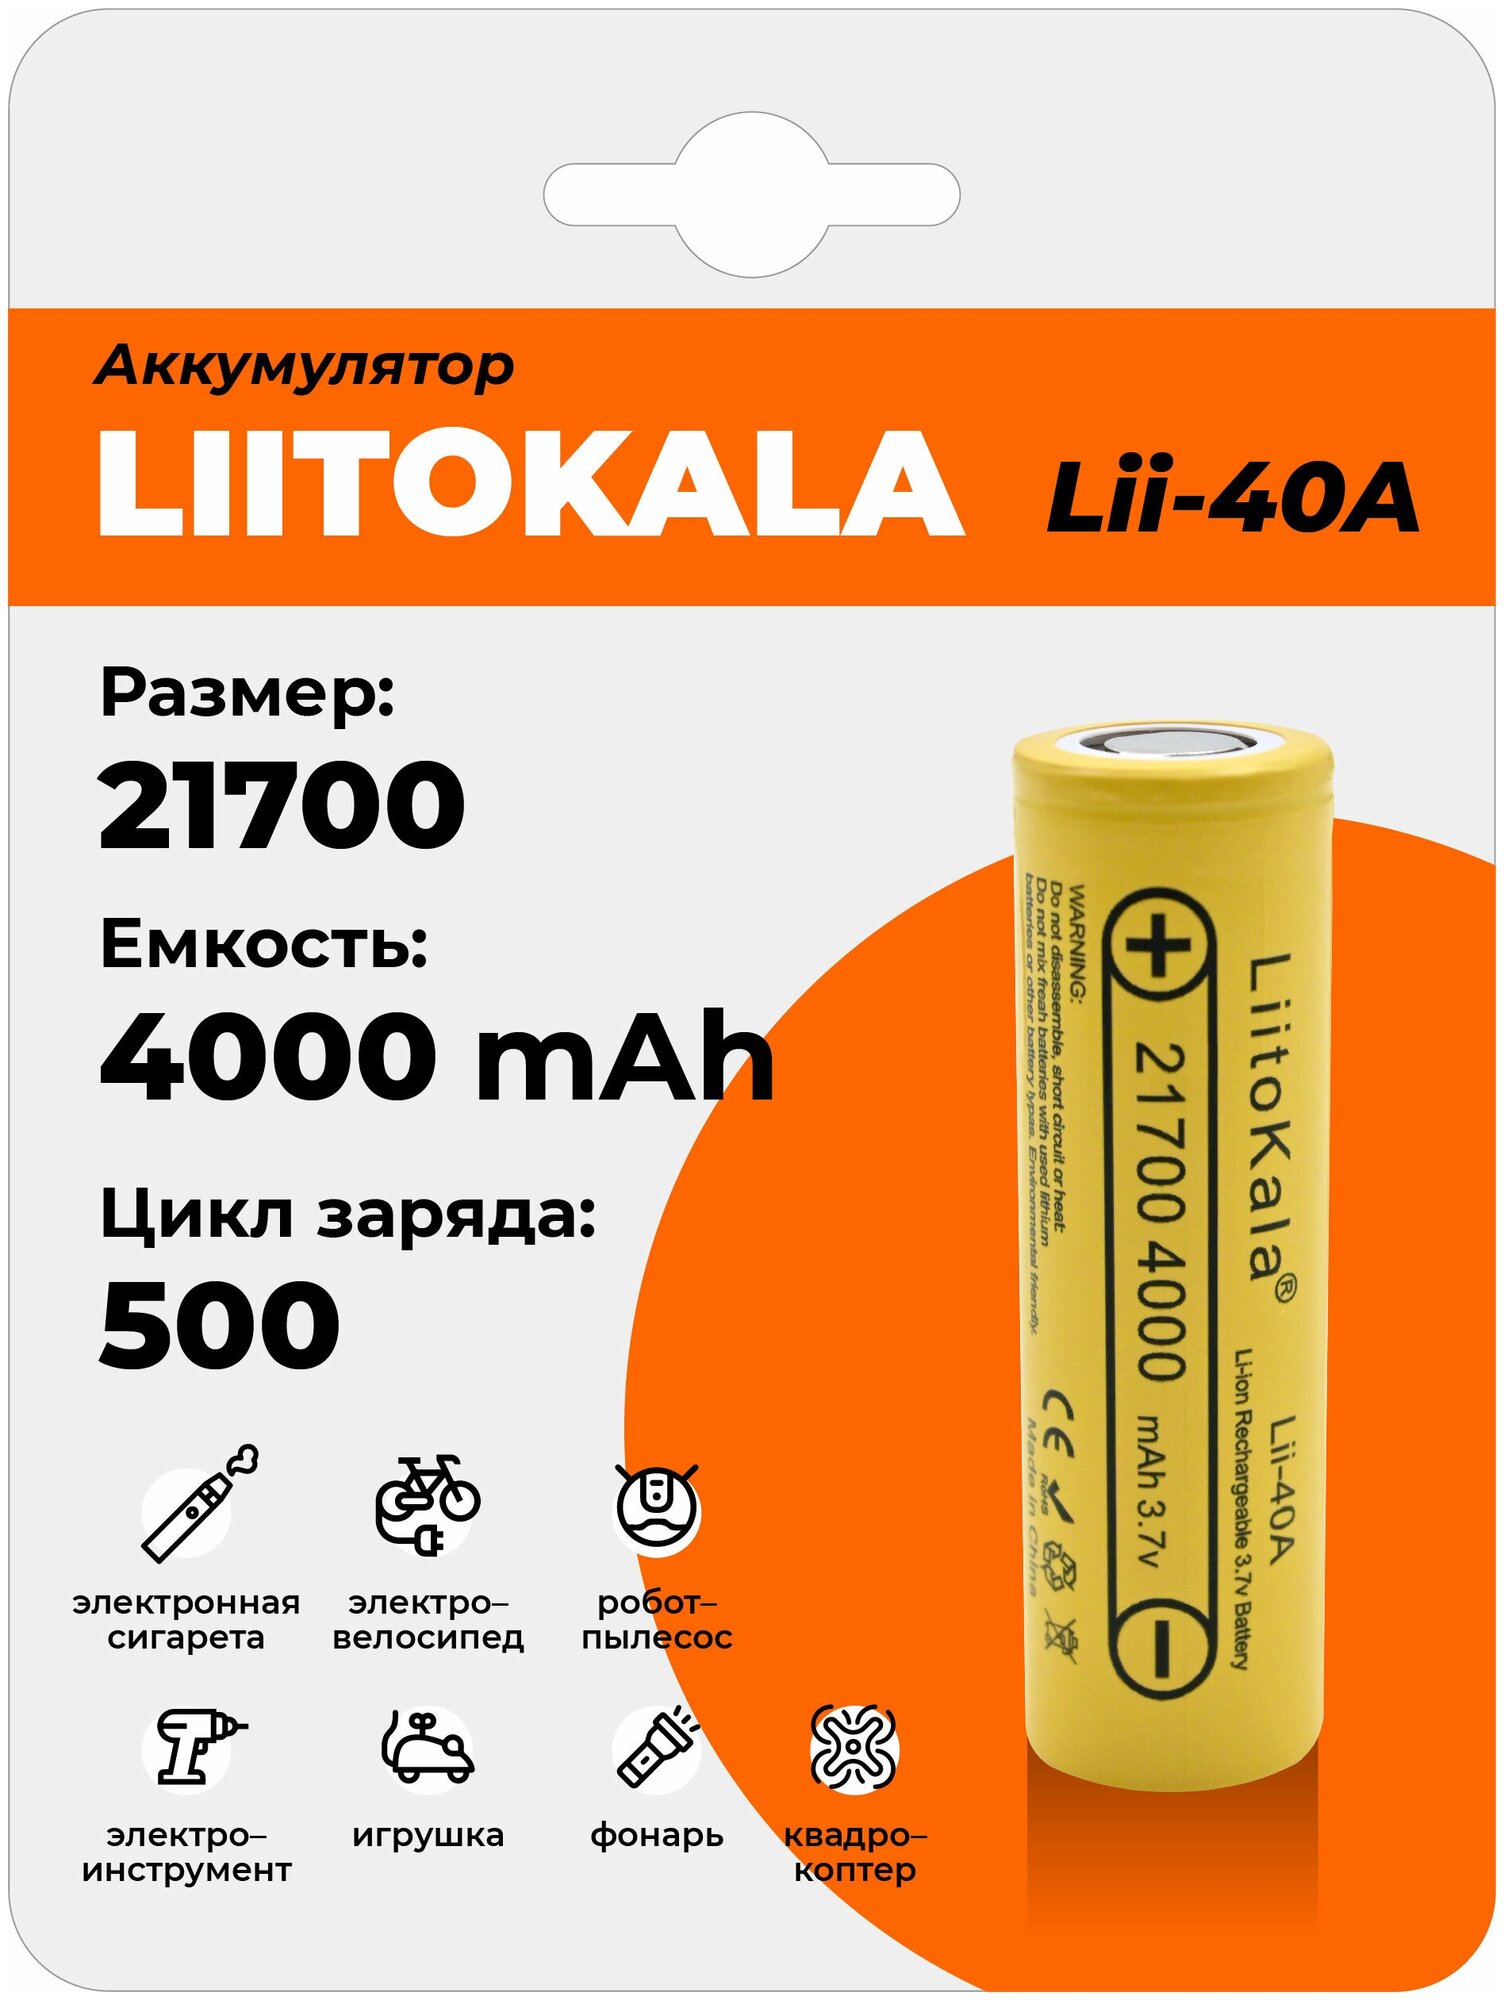 Аккумулятор LiitoKala Lii-40A 21700 4000 mAh универсальная Li-Ion батарейка литий-ионный аккумулятор